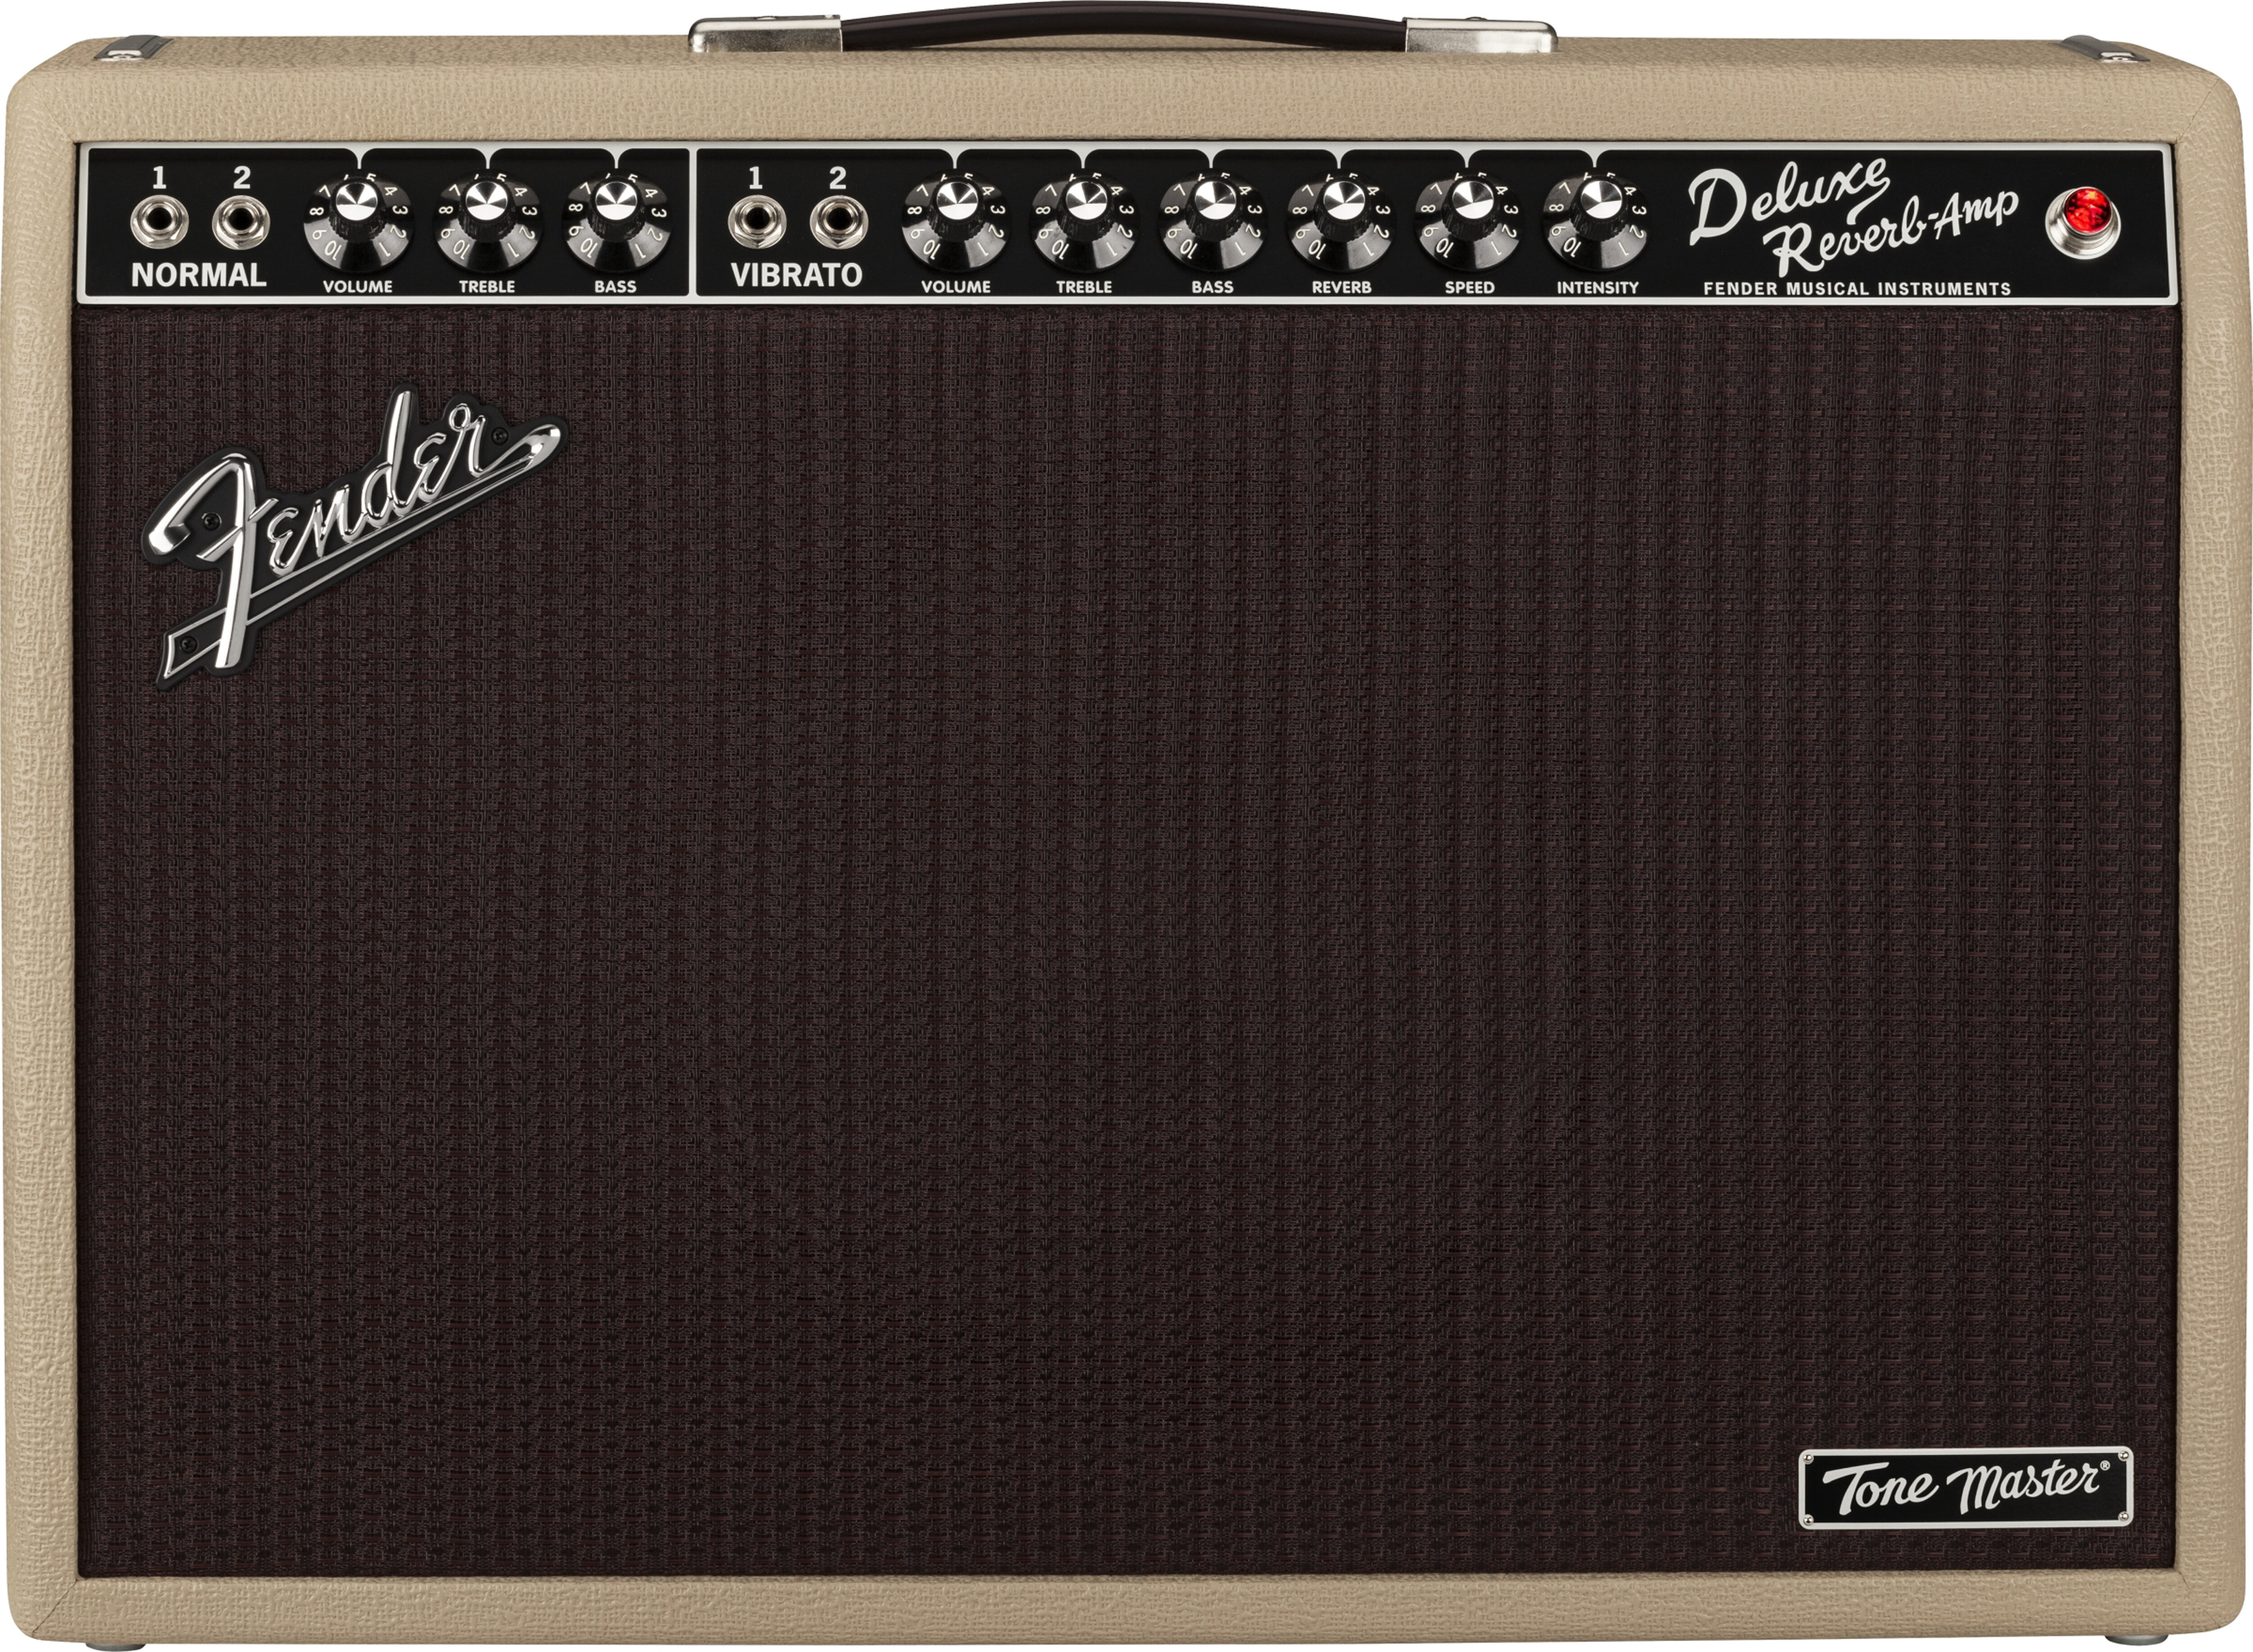 Fender Tone Master Deluxe Revrb Digital Amp Blond -  2274100982